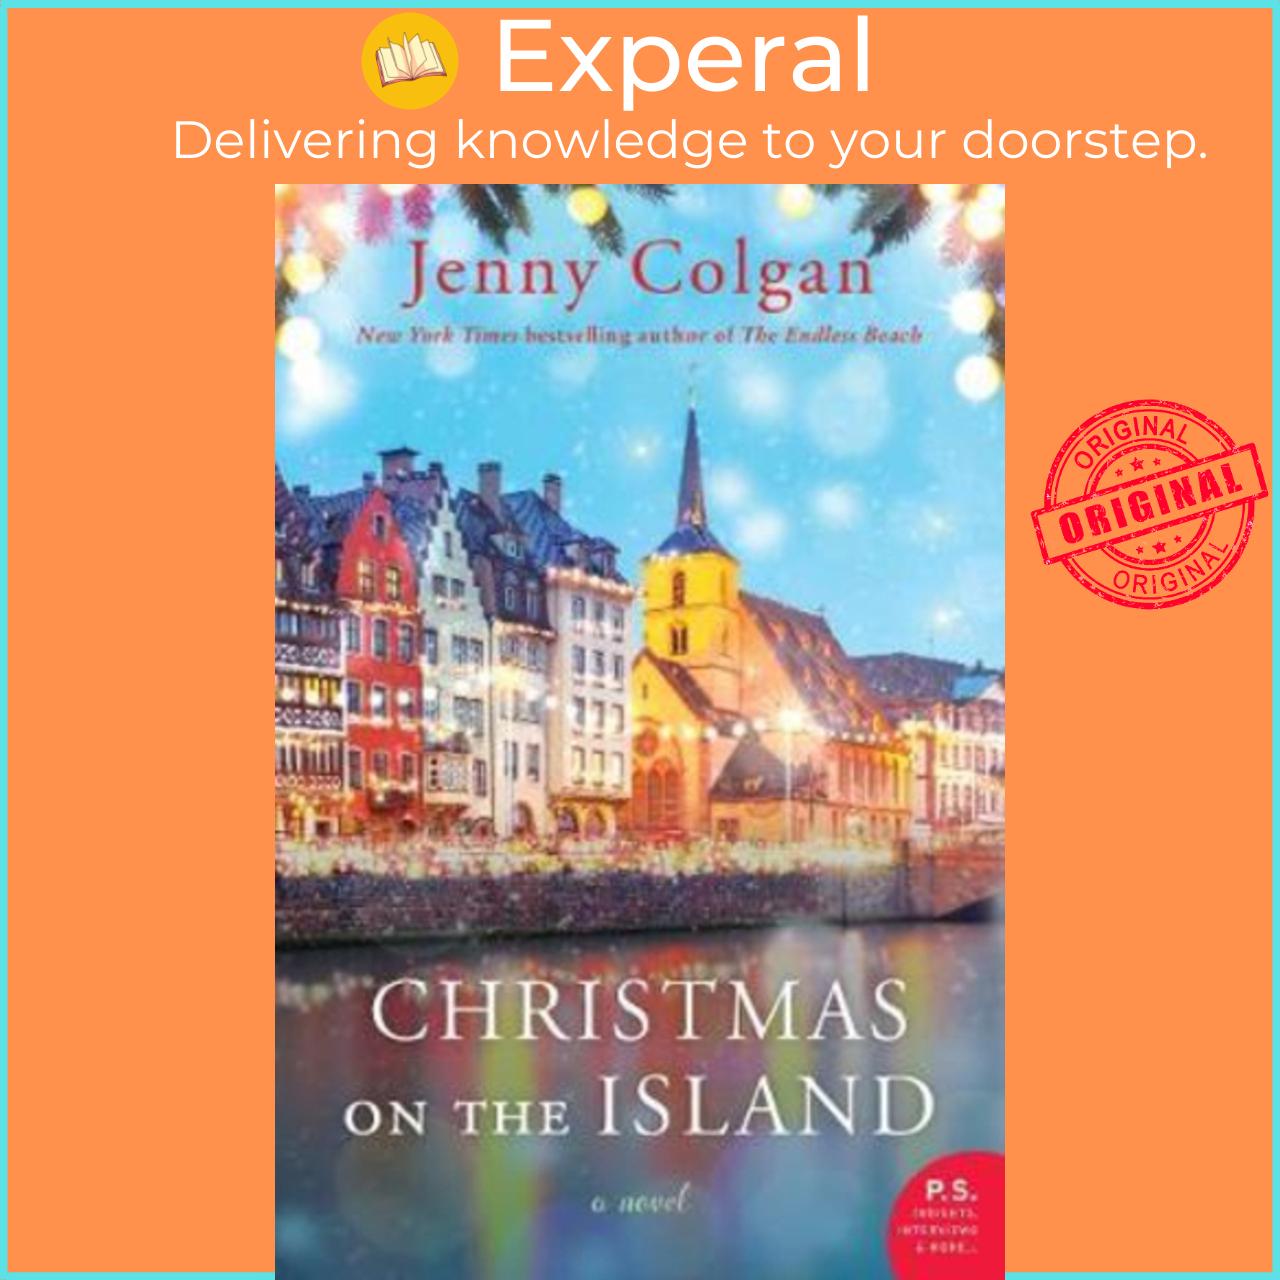 Sách - Christmas on the Island by Jenny Colgan (US edition, paperback)